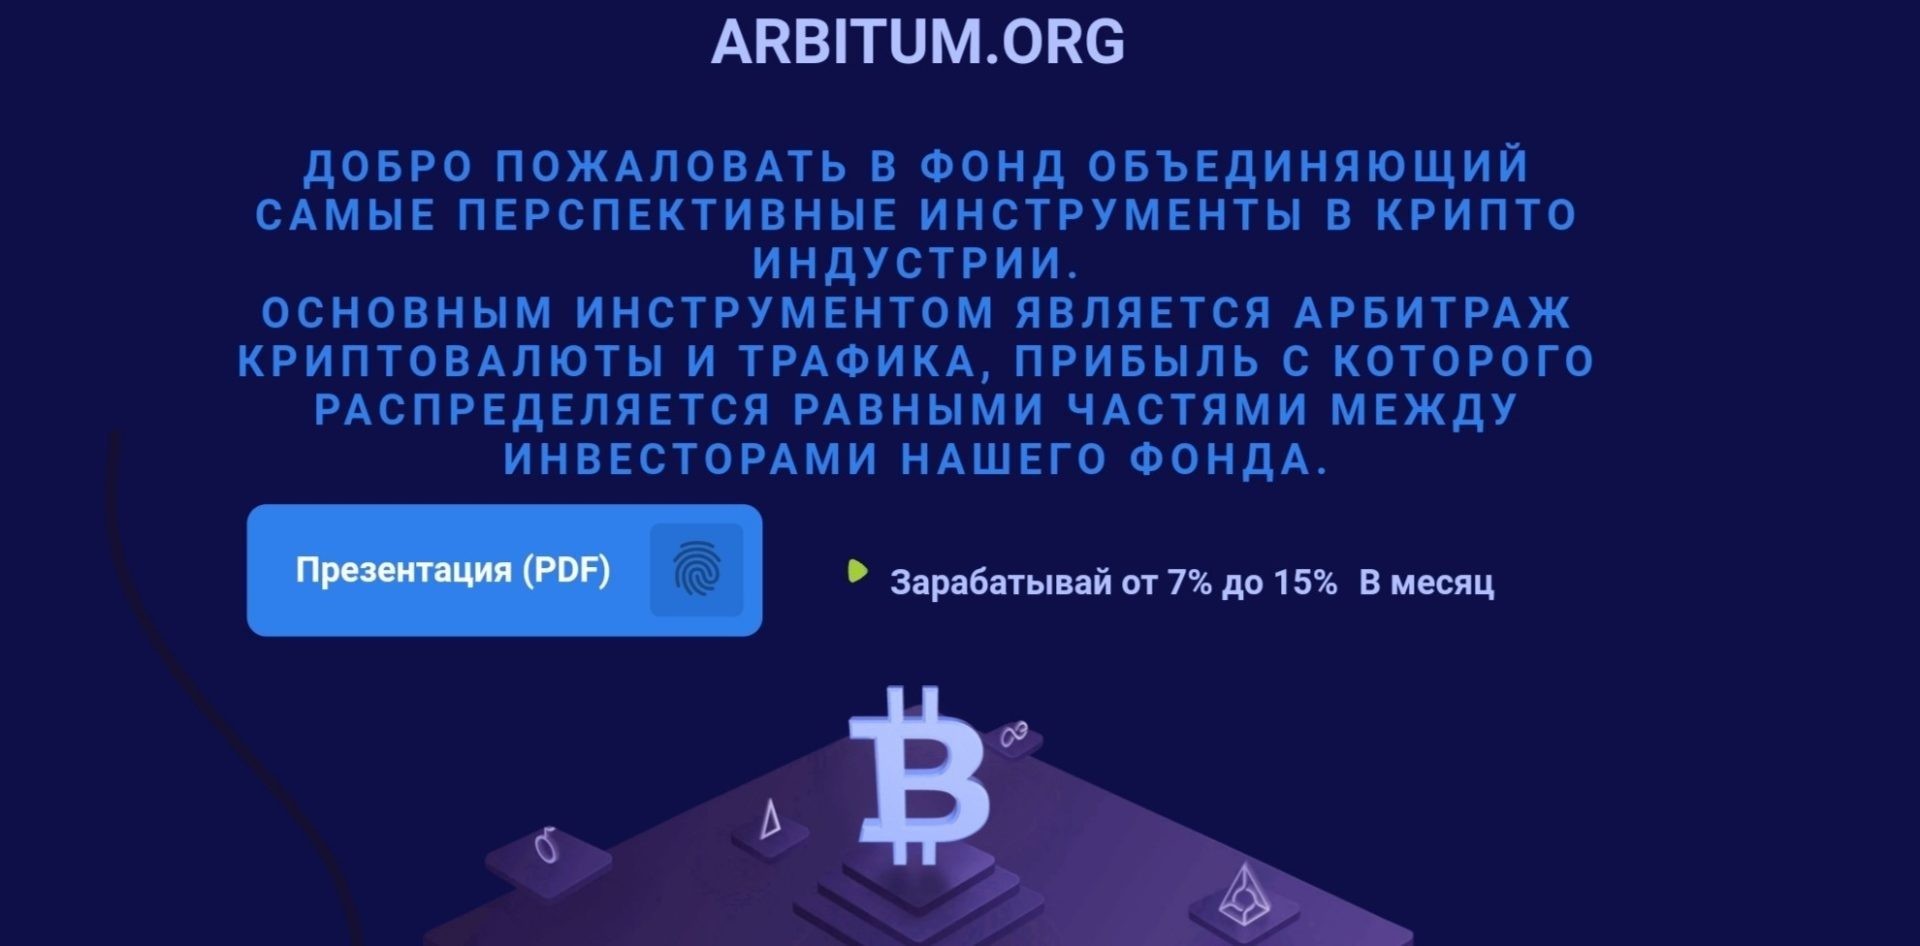 Проект Arbitum инвестиционный фонд